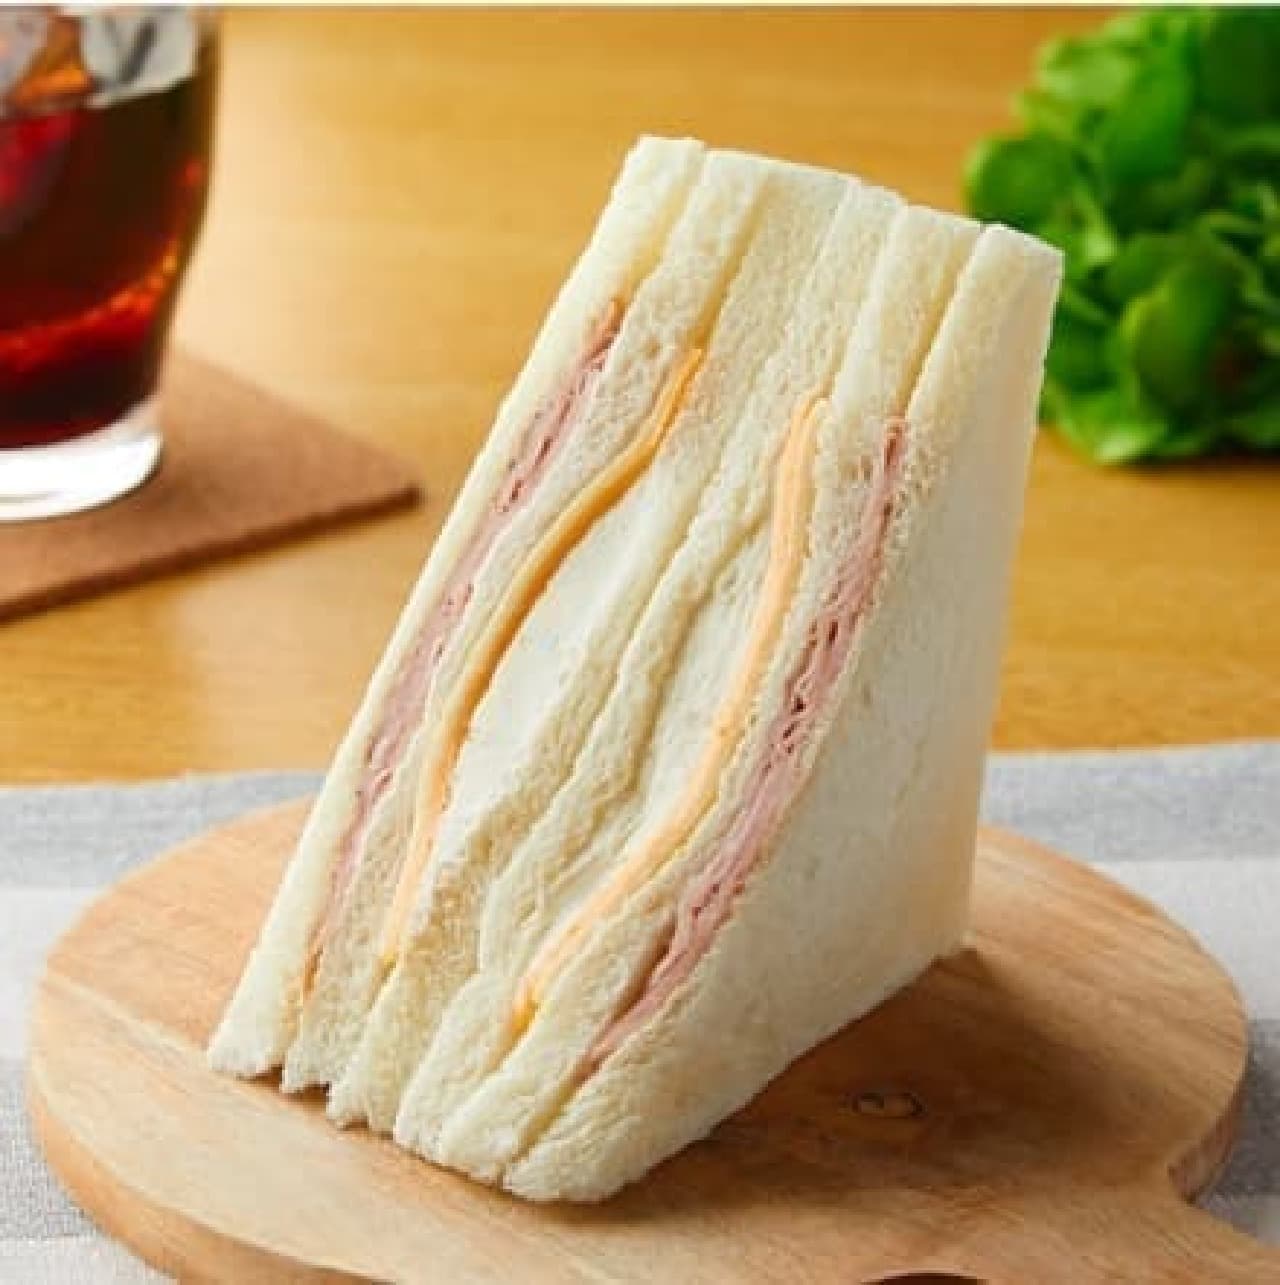 FamilyMart "3 types of cheese sandwich"